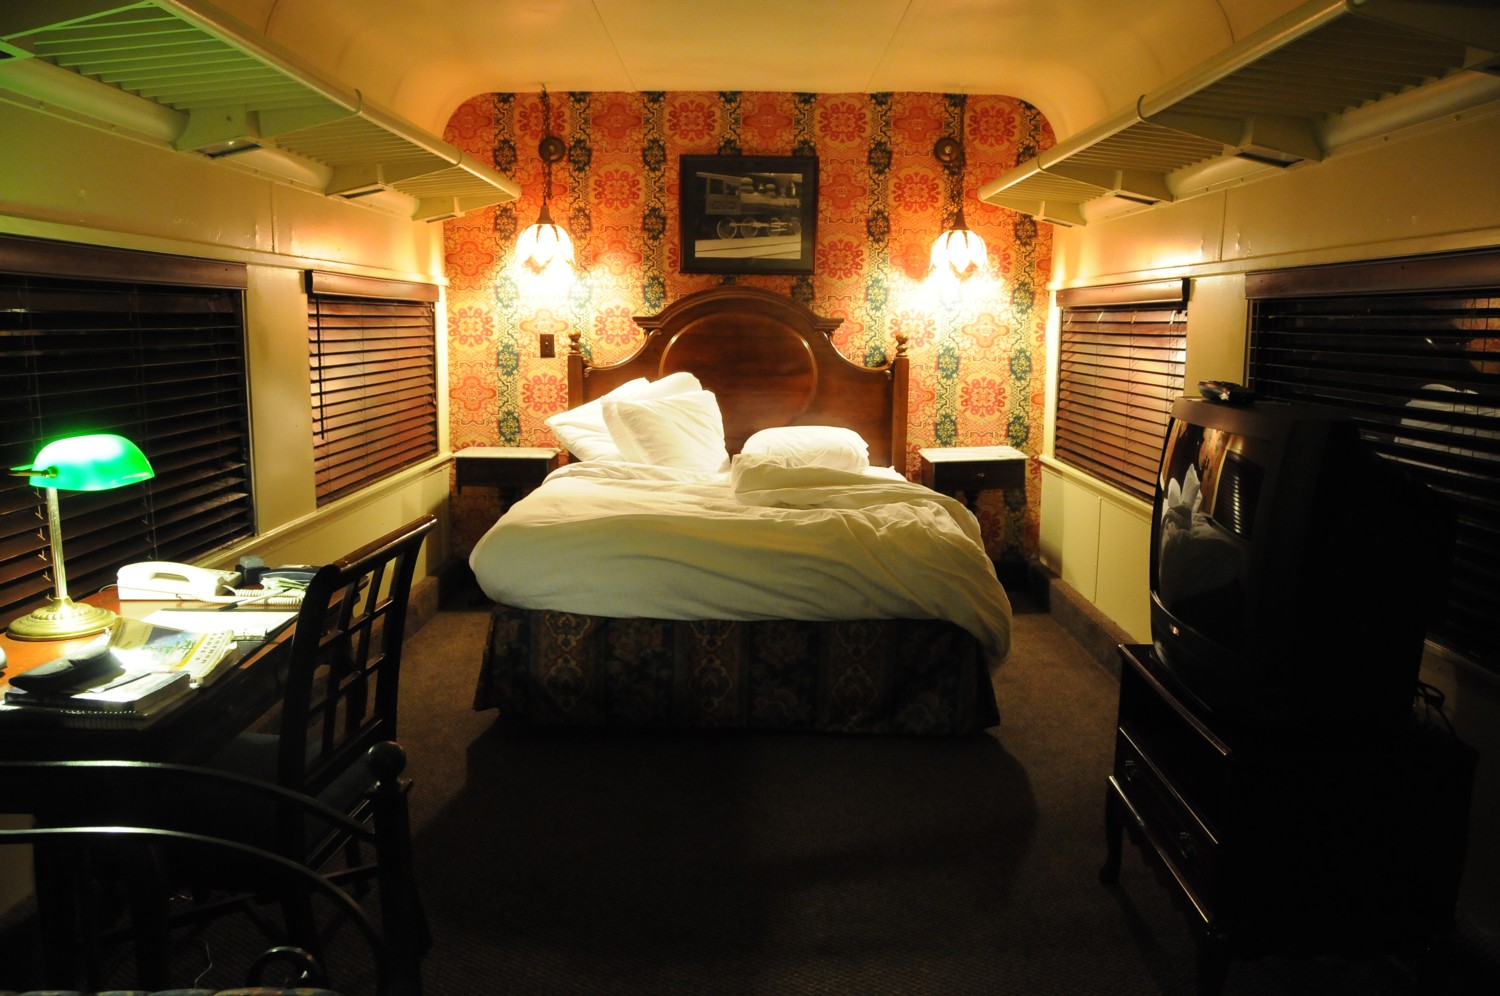 Historic train car turned into an enchanting sleeping room at the Chattanooga Choo Choo, Chattanooga, Tennessee © 2016 Karen Rubin/goingplacesfarandnear.com